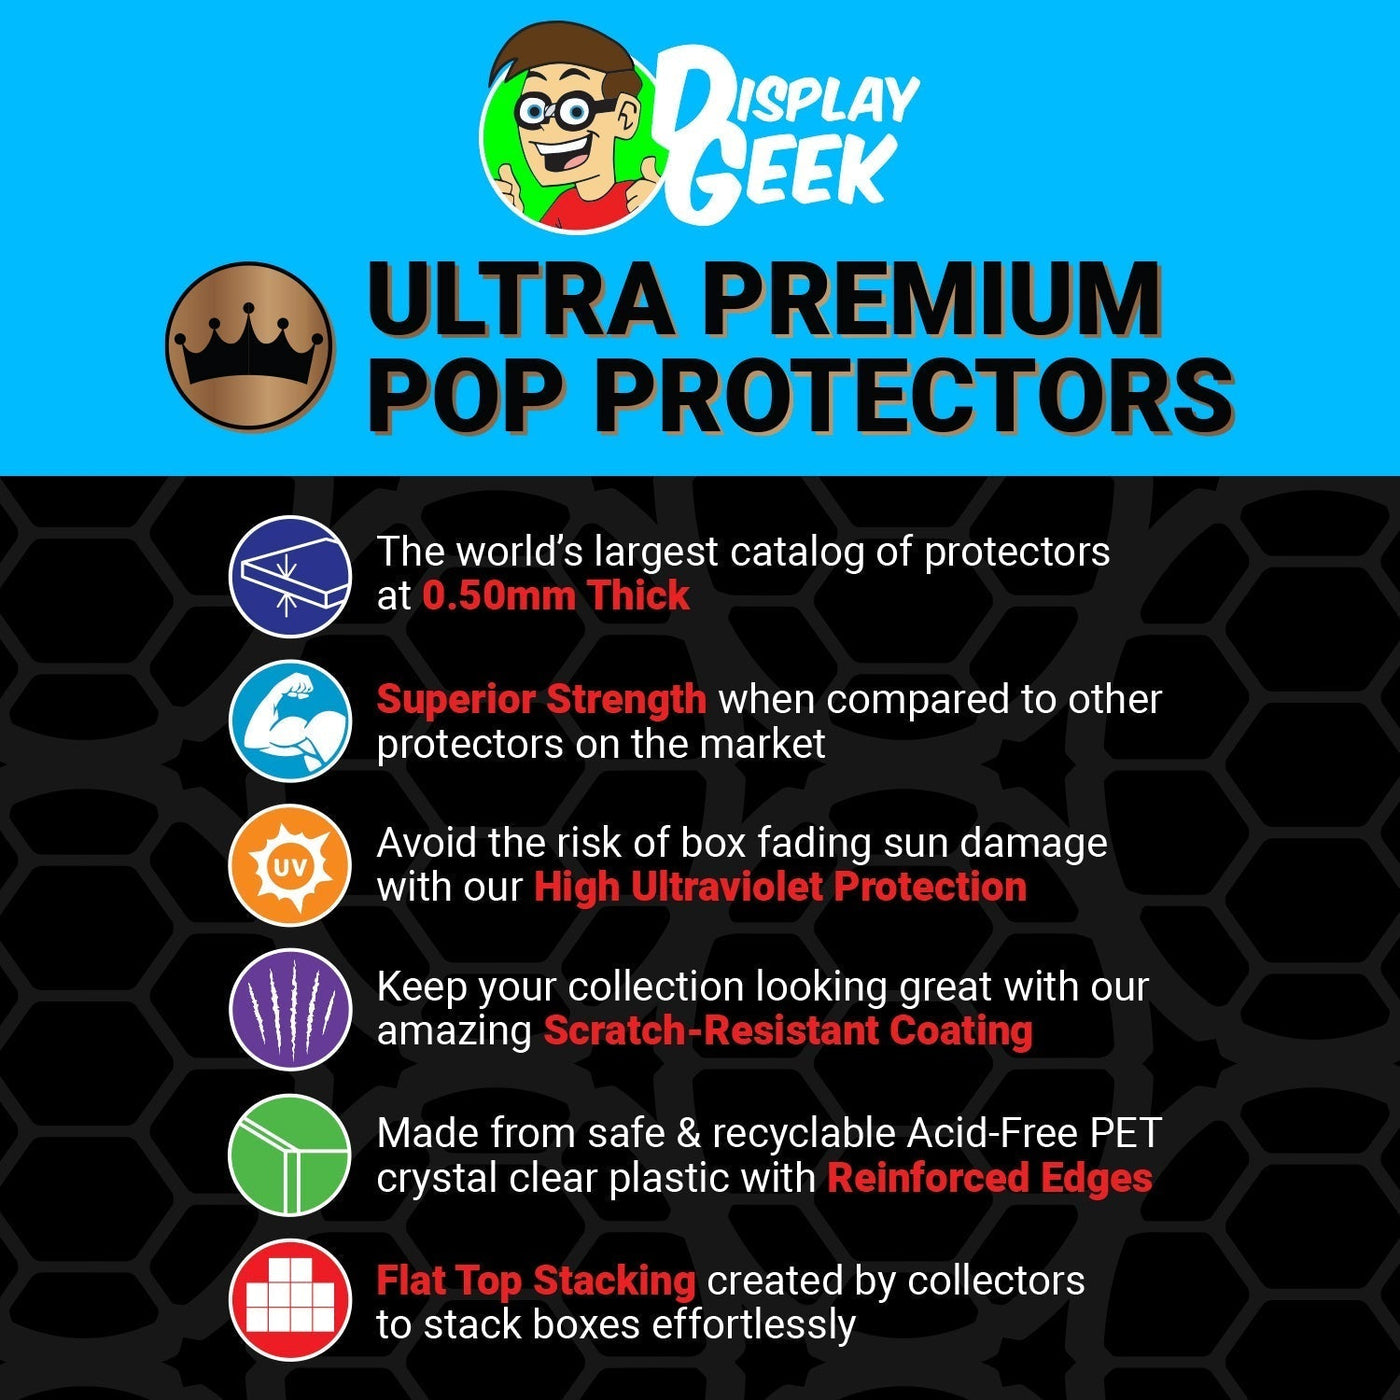 Pop Protector for 2 Pack Rita Repulsa & Zordon Funko Pop on The Protector Guide App by Display Geek